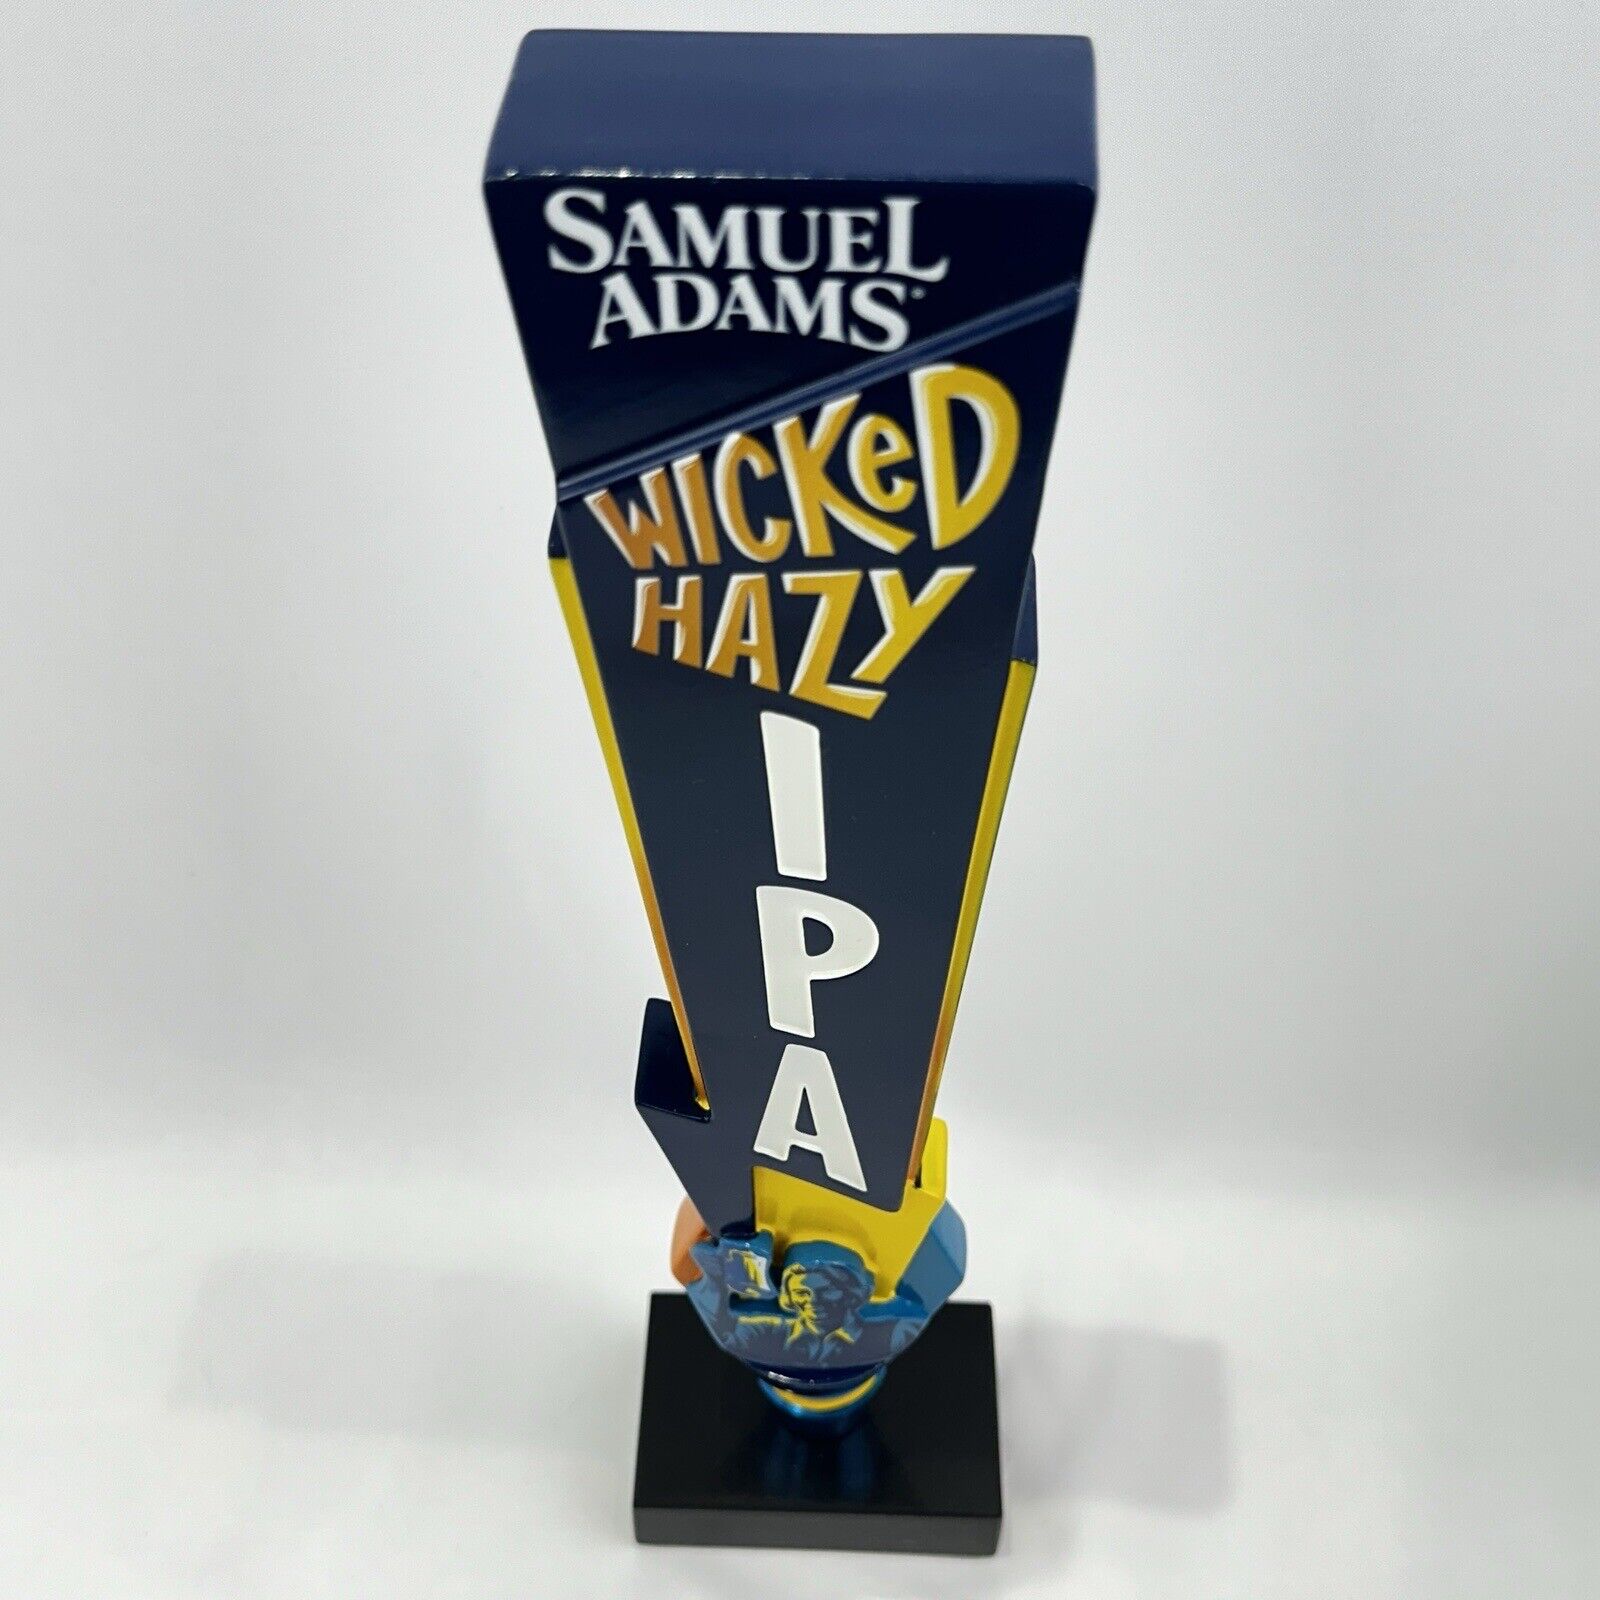 Samuel Sam Adams Wicked Hazy IPA Beer Tap Handle 12” Tall - Brand New In Box